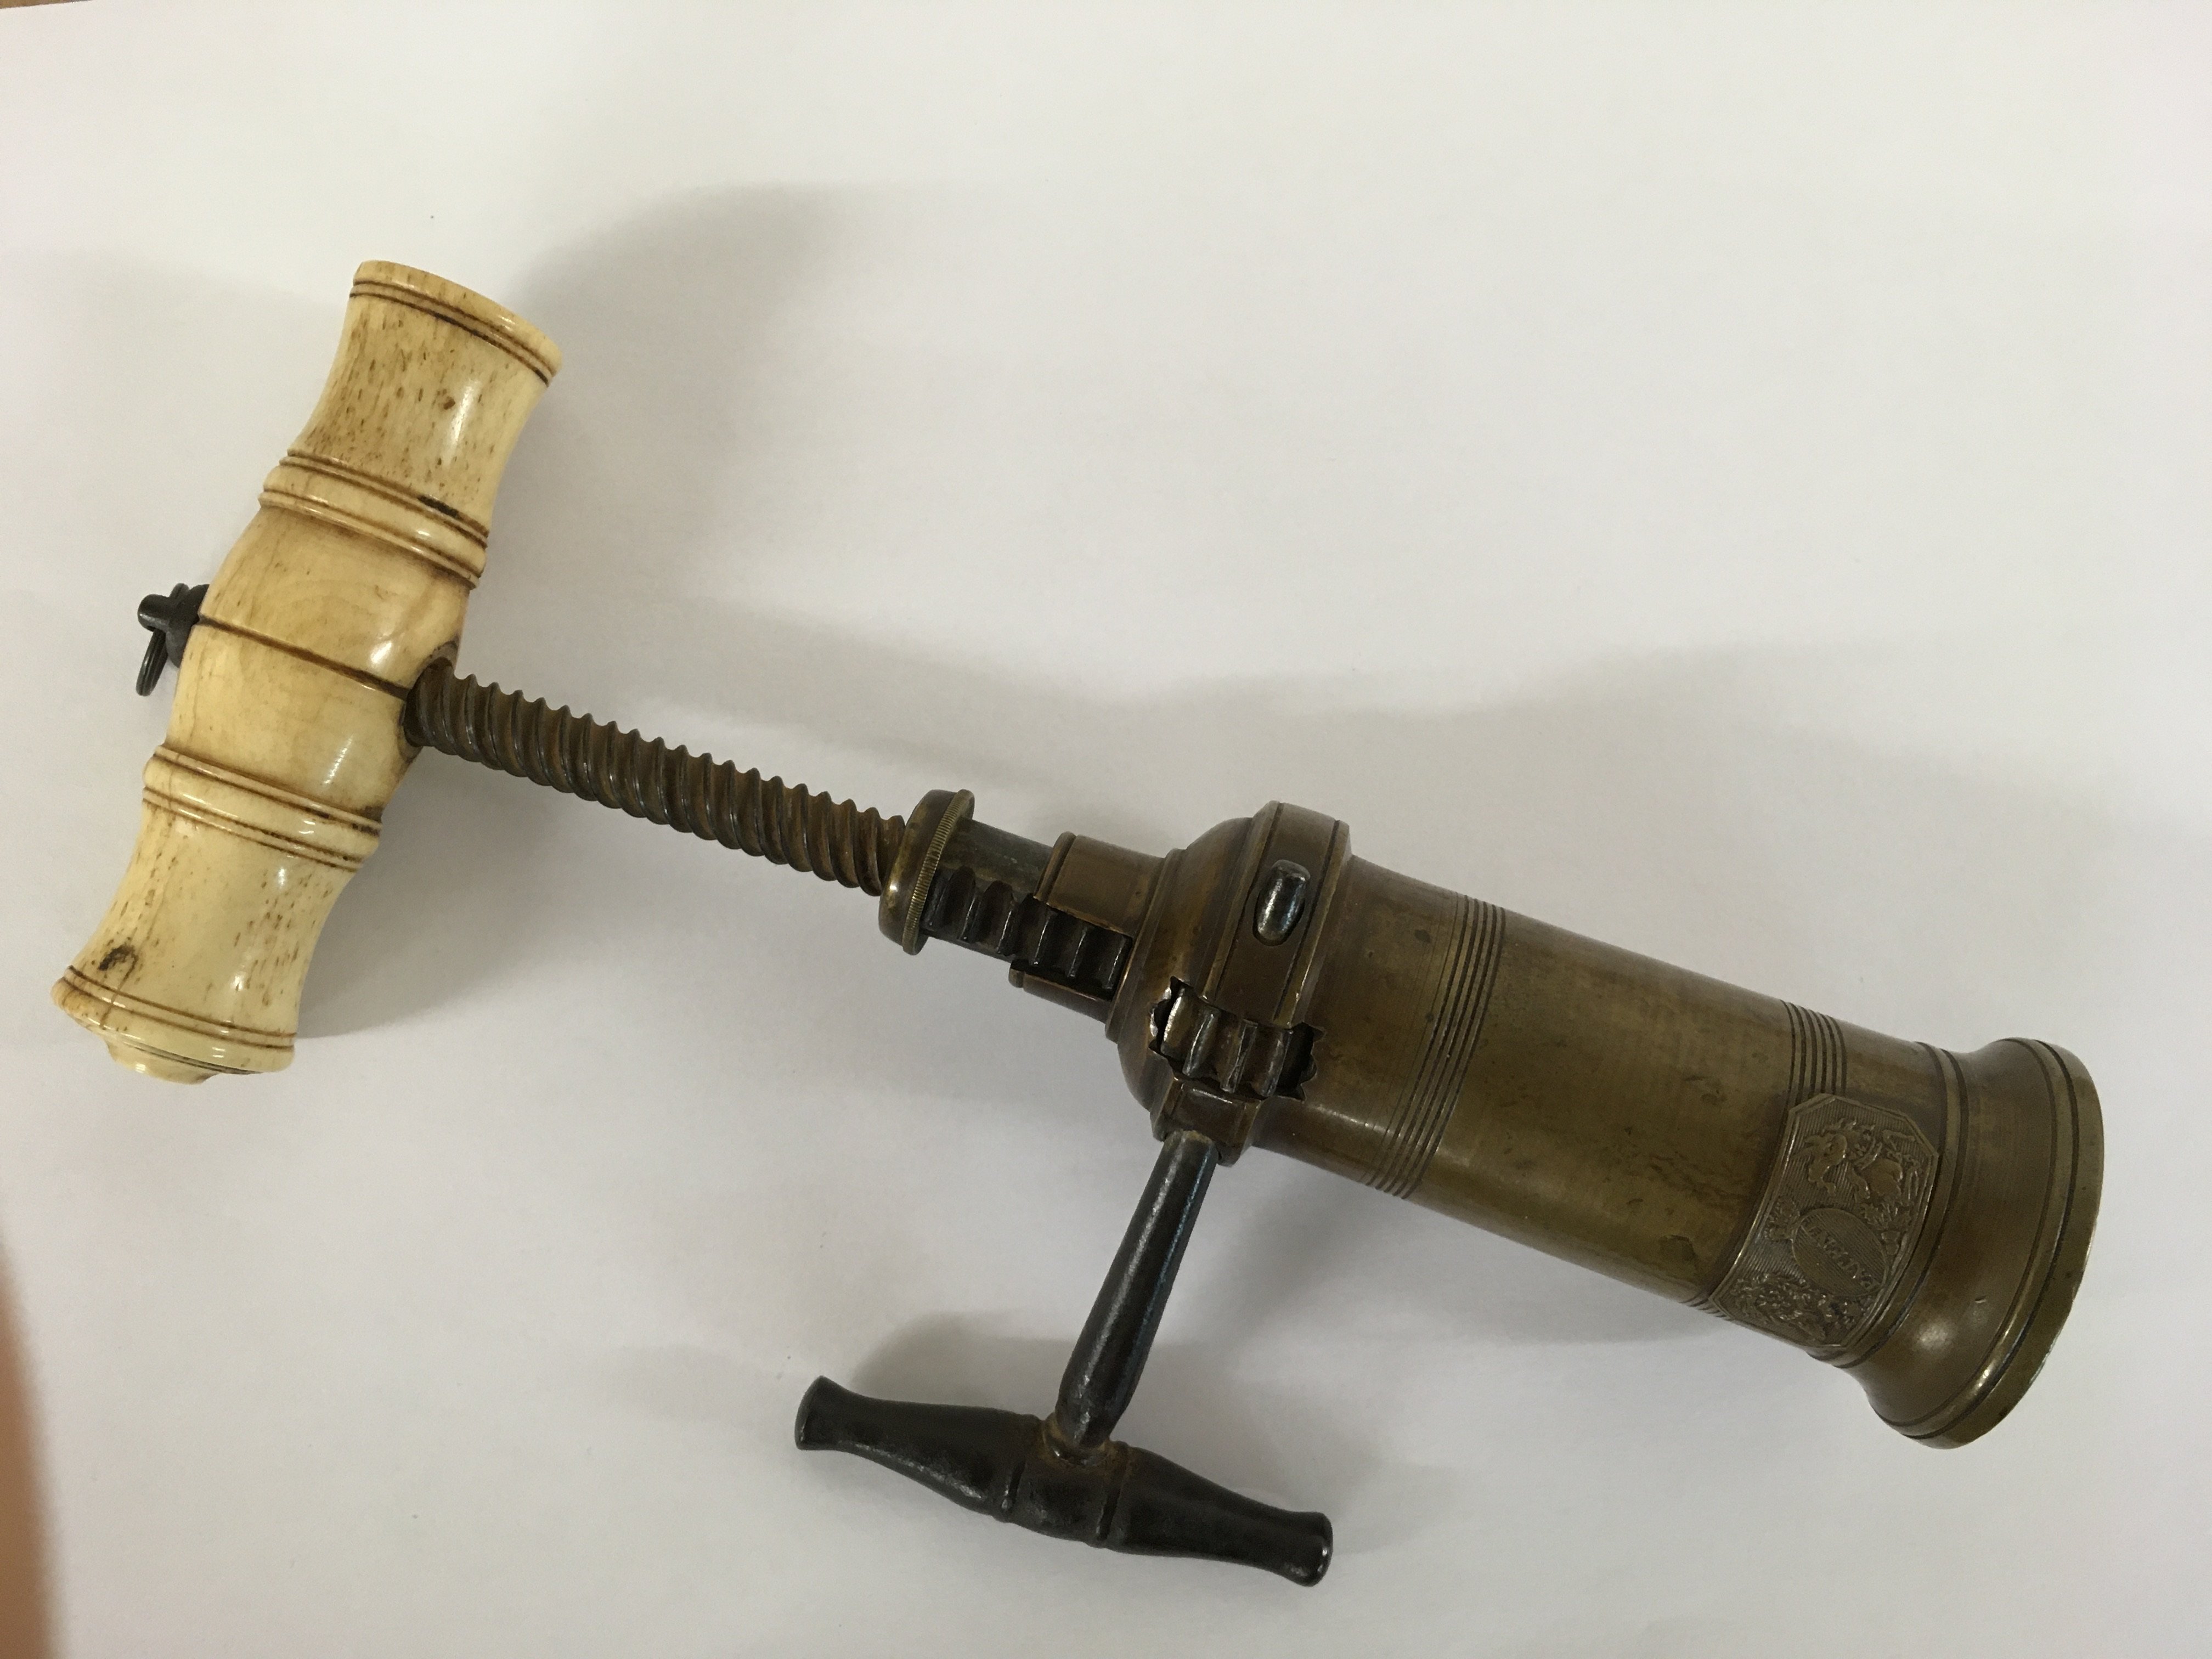 A brass barrel cork screw with bone handle